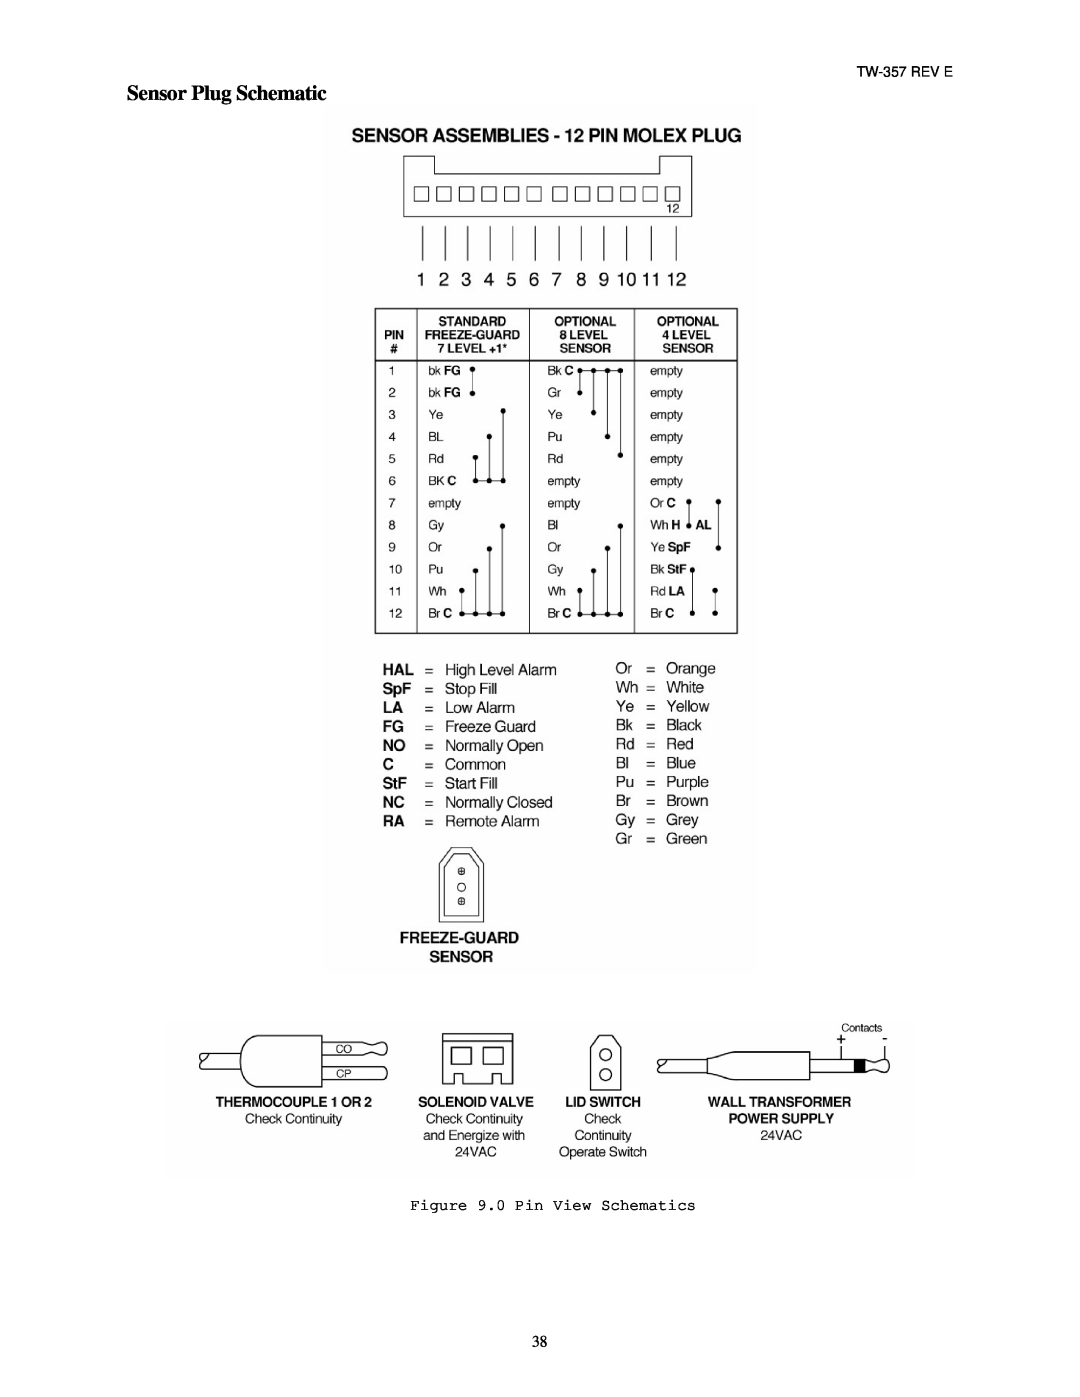 Taylor manual Sensor Plug Schematic, 0 Pin View Schematics, TW-357 REV E 